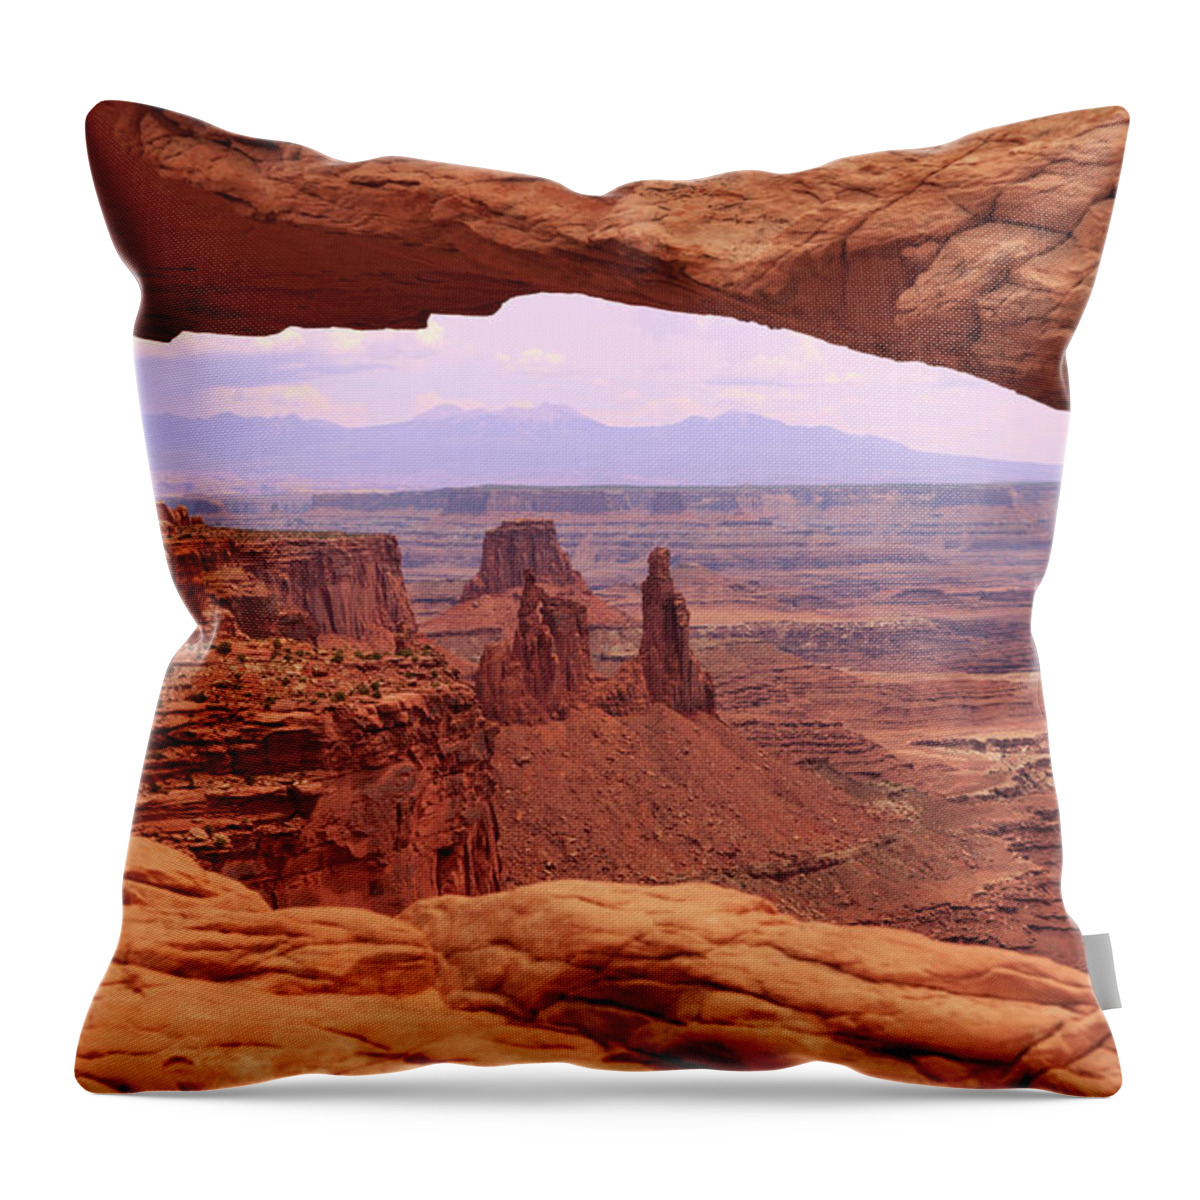 Toughness Throw Pillow featuring the photograph Canyonlands National Park At Sunset by Sabrinapintus